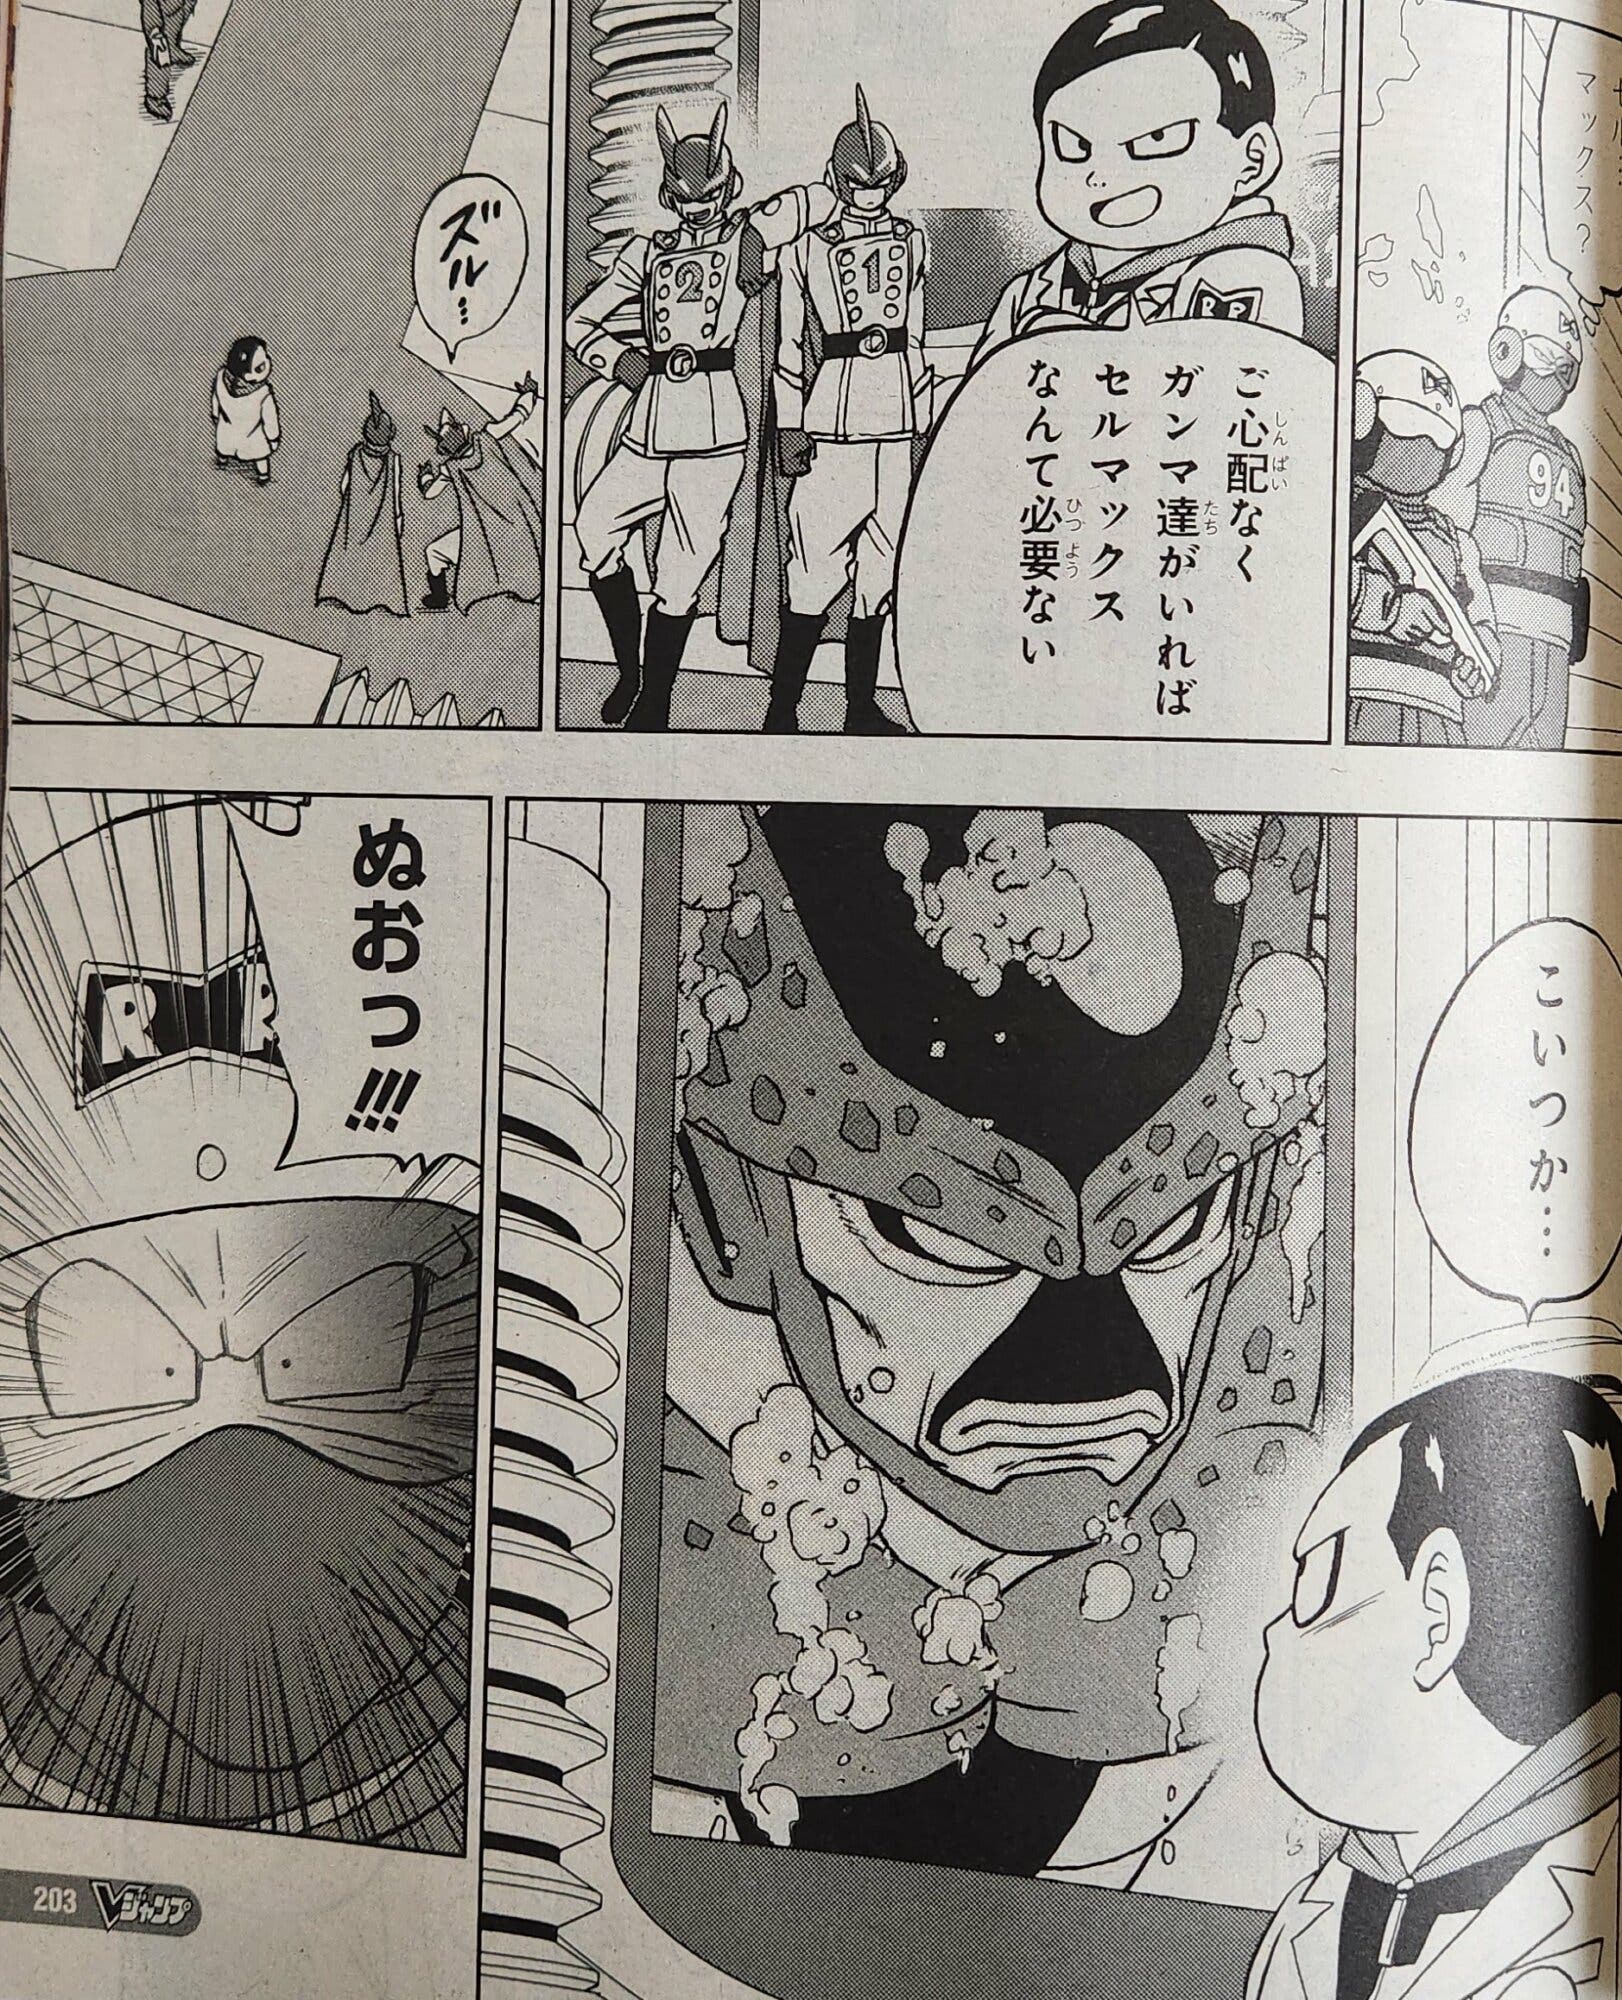 Dragon Ball Super: Ya disponible el capítulo 92 del manga gratis y, dragon  ball manga super 92 